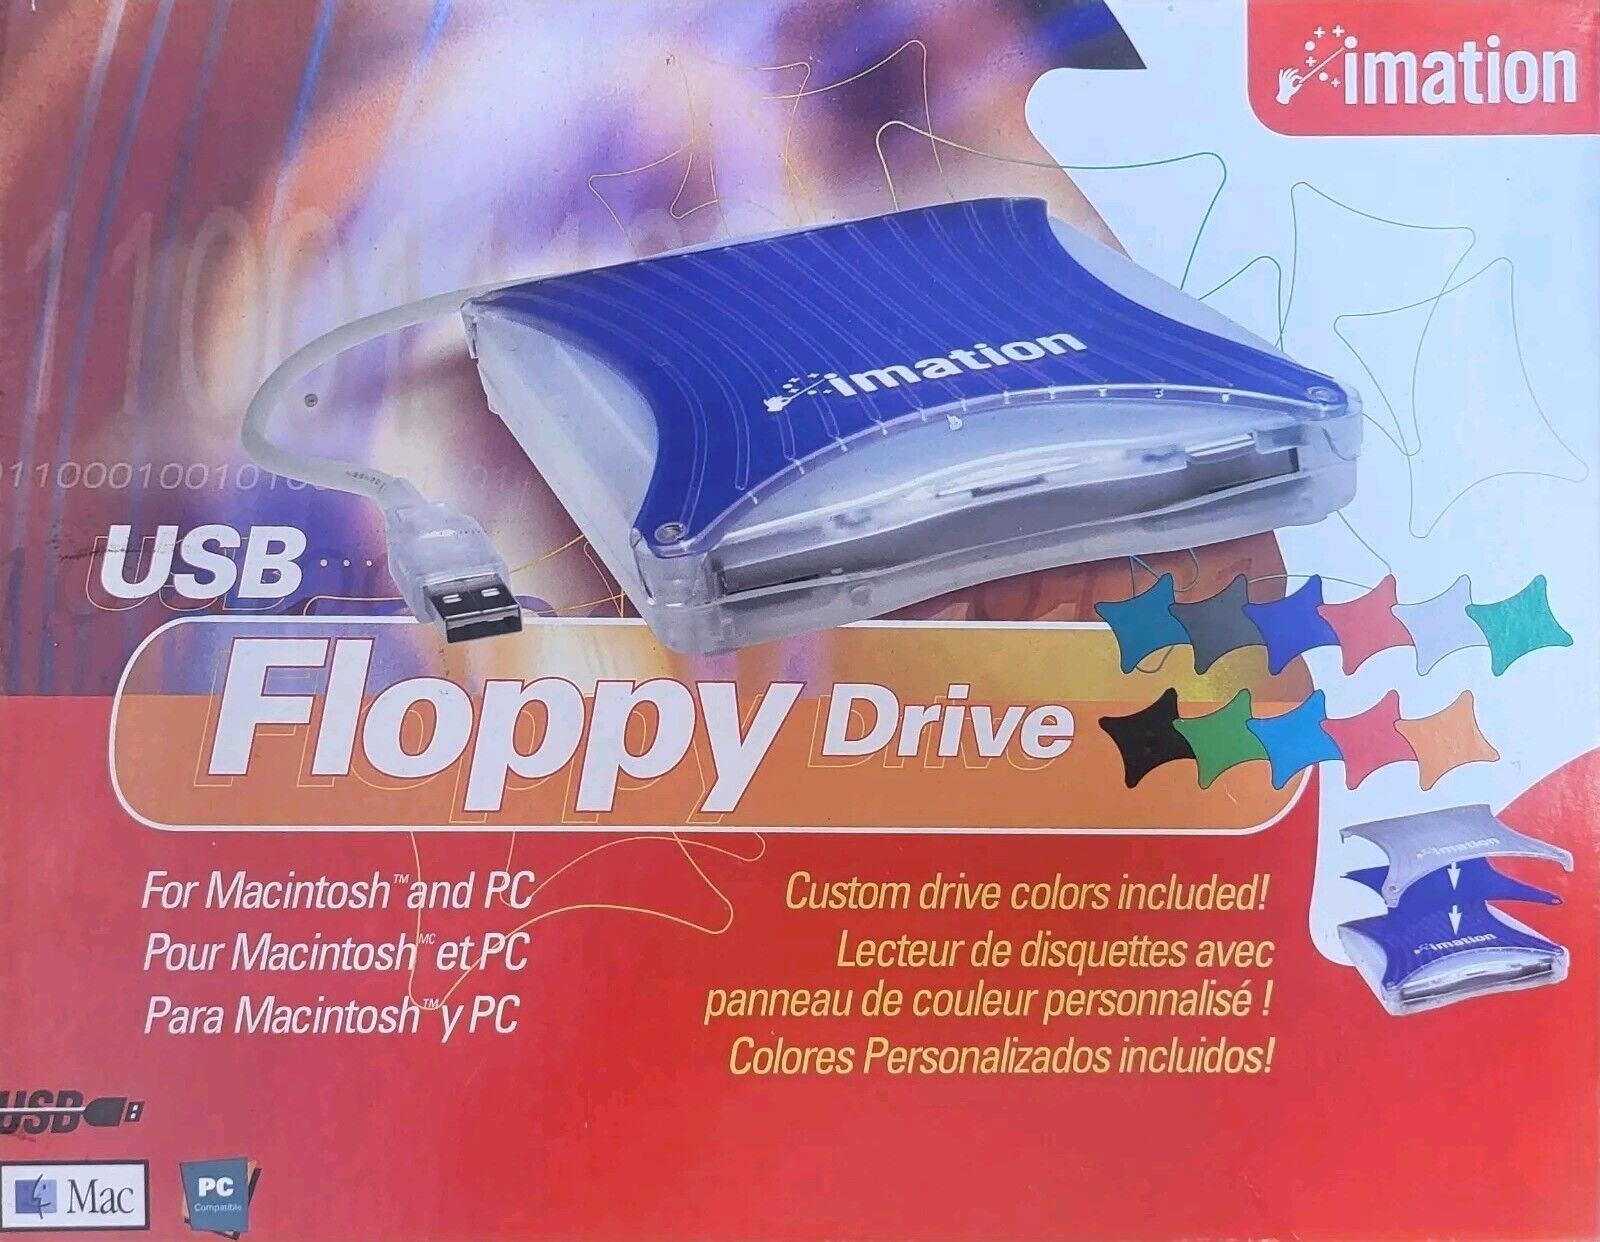 Imation USB Floppy Drive Model 2000 Macintosh & Windows PC Systems Box